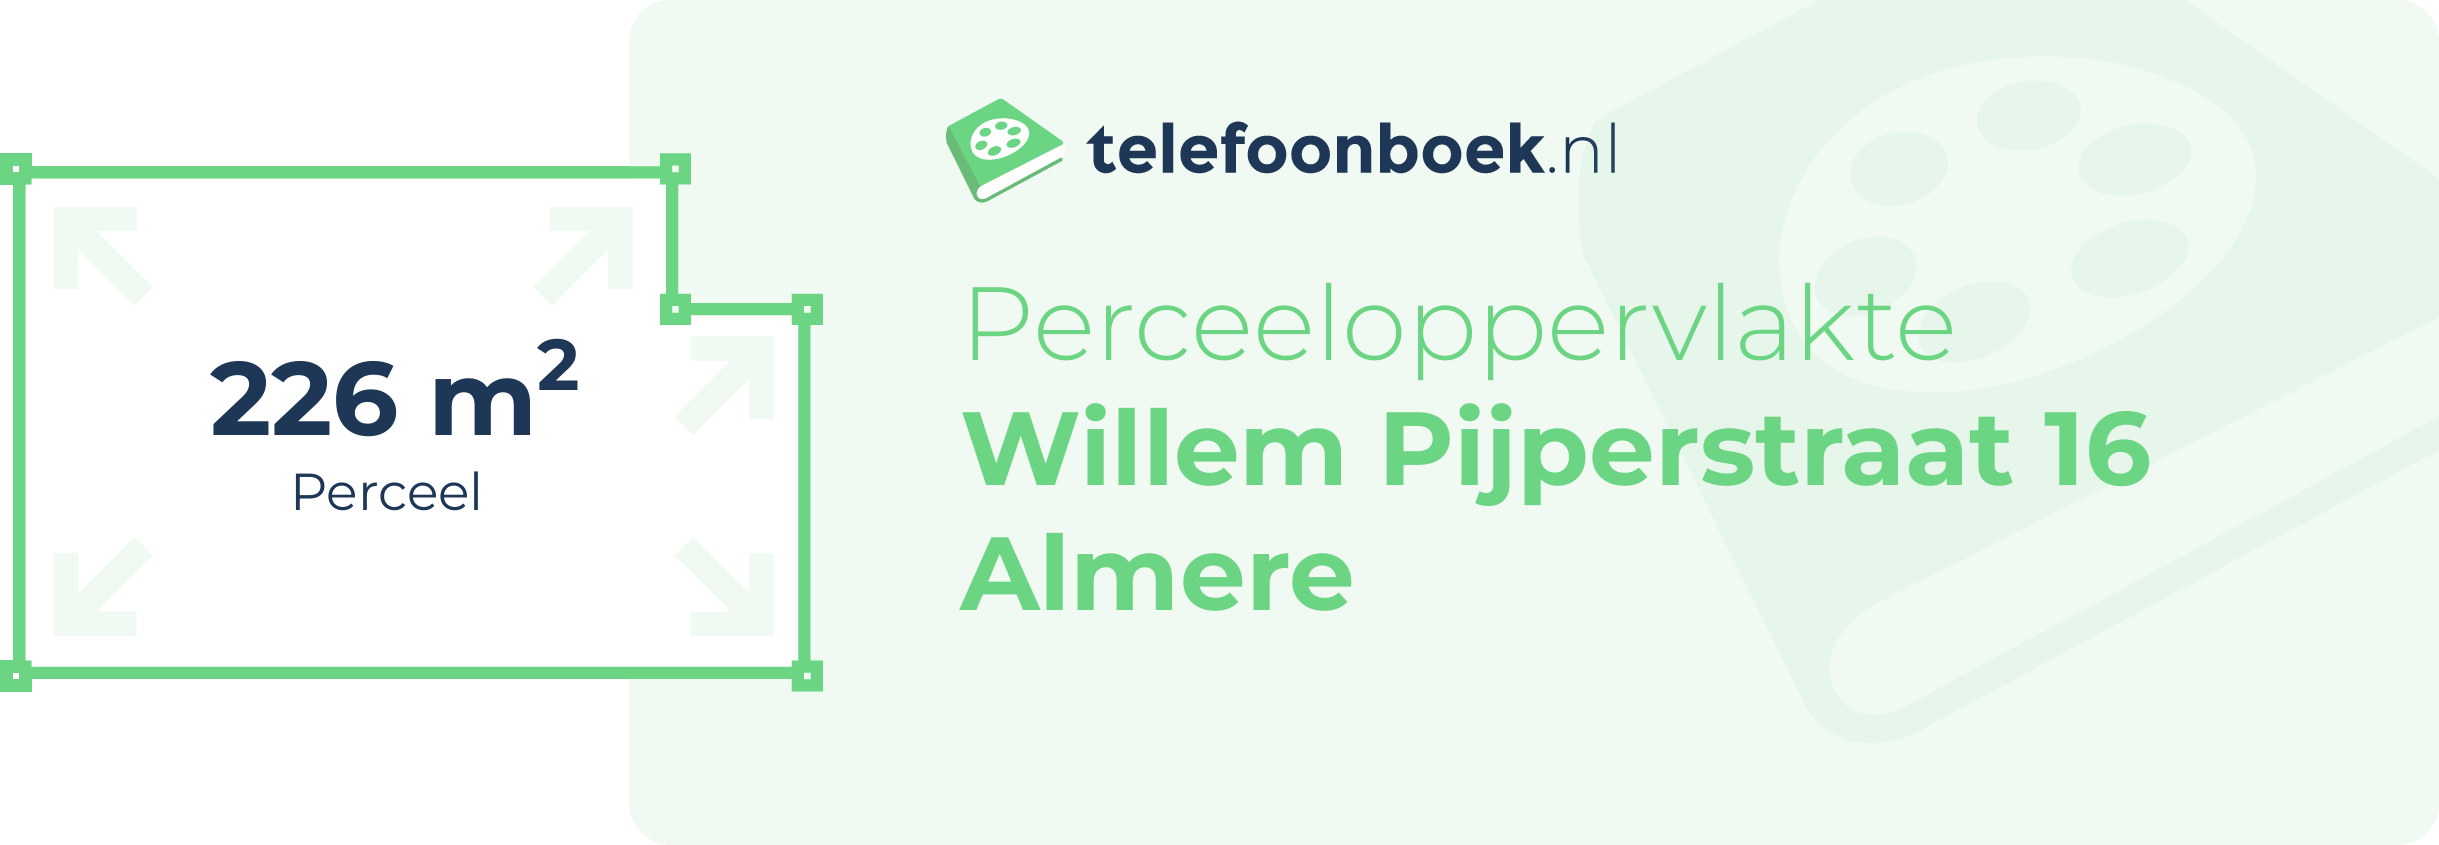 Perceeloppervlakte Willem Pijperstraat 16 Almere